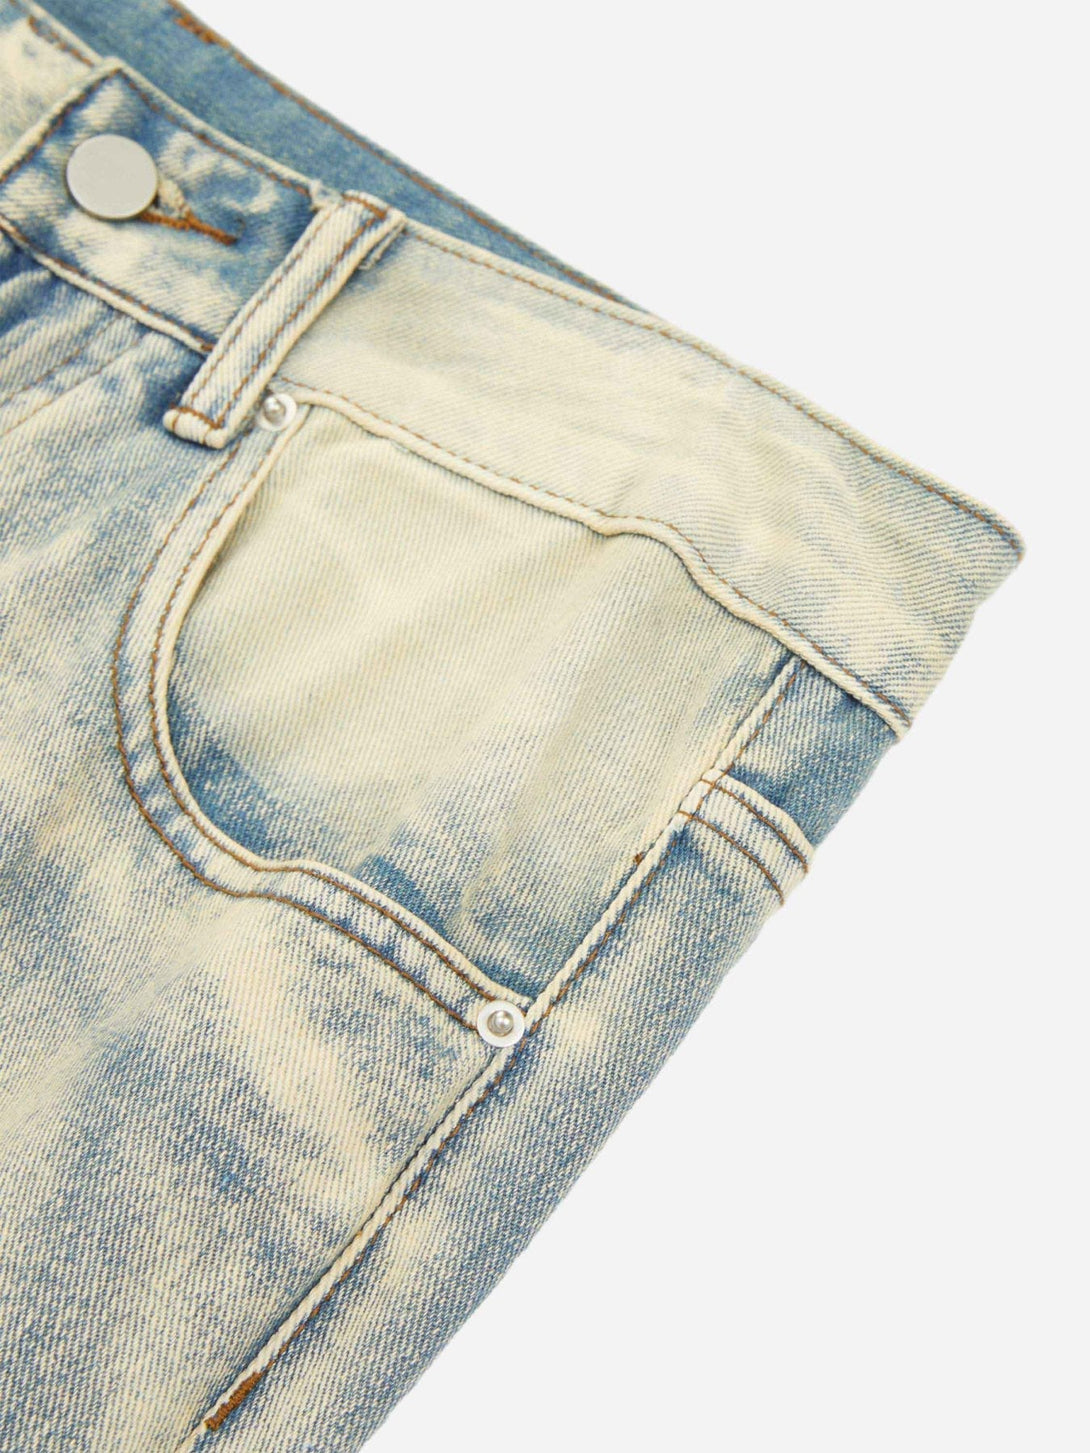 Majesda® - Ripped Double Straight Jeans- Outfit Ideas - Streetwear Fashion - majesda.com